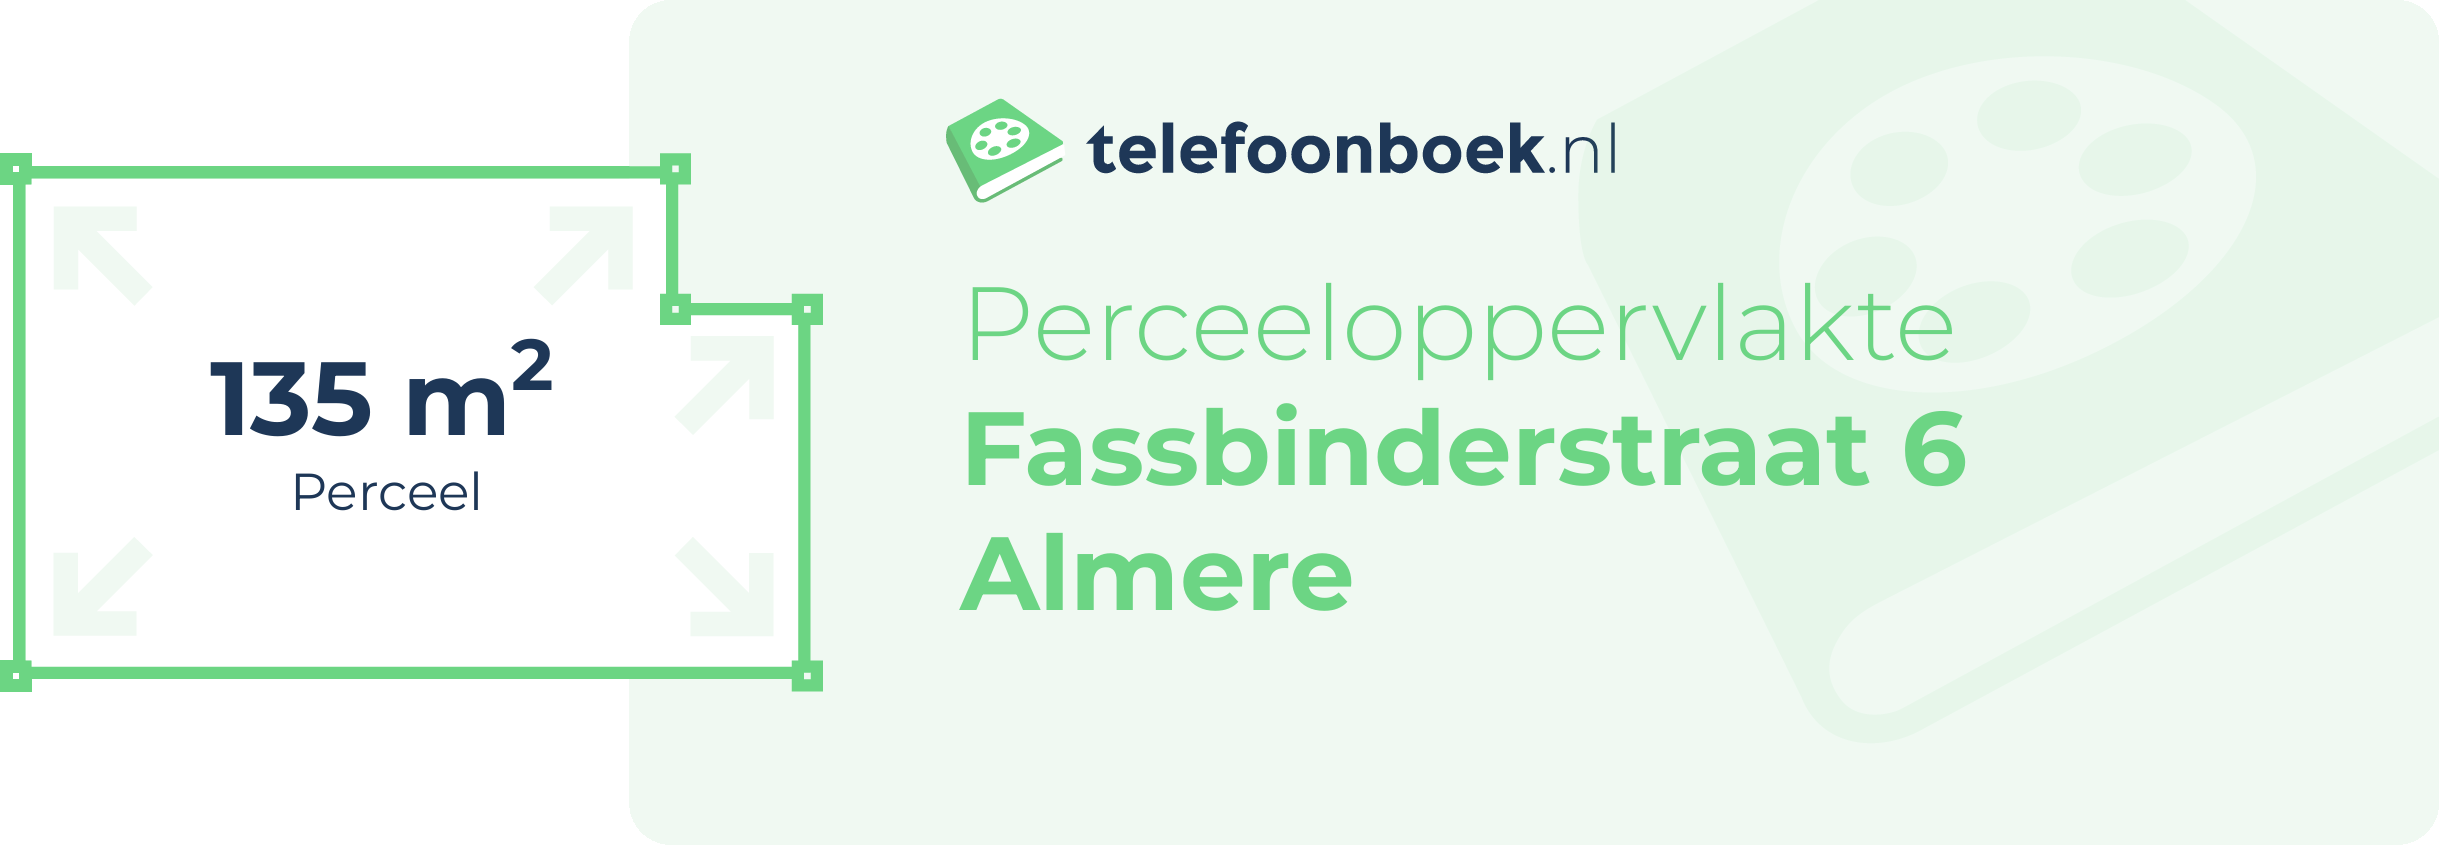 Perceeloppervlakte Fassbinderstraat 6 Almere